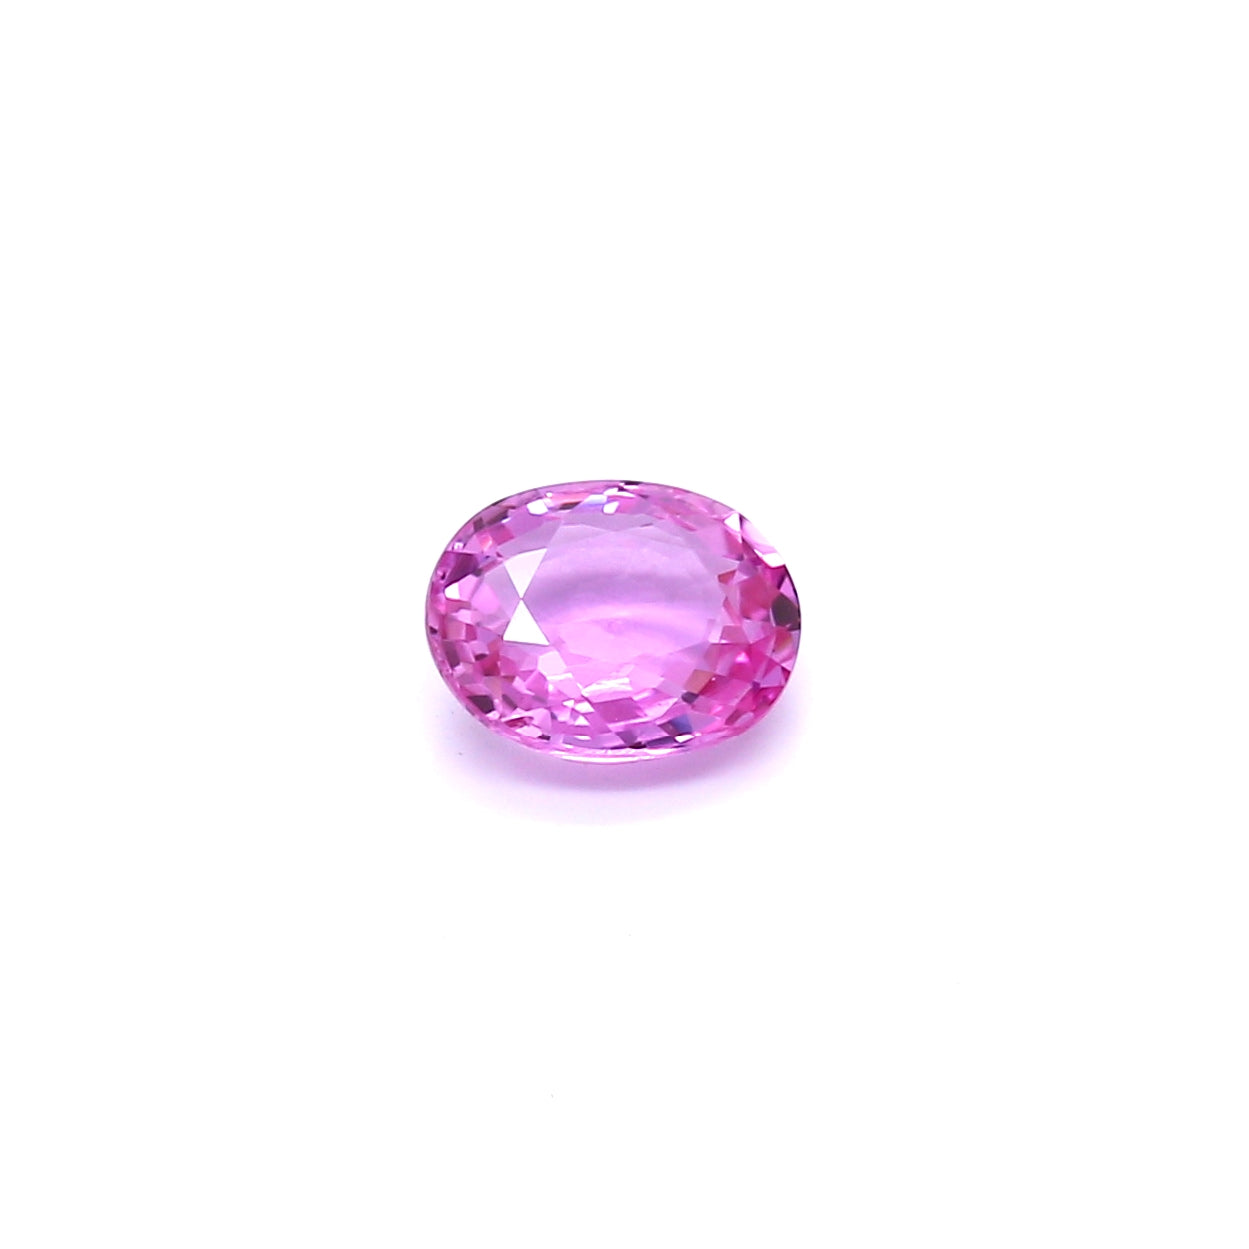 1.03ct Pink, Oval Sapphire, Heated, Madagascar - 6.58 x 5.39 x 3.06mm